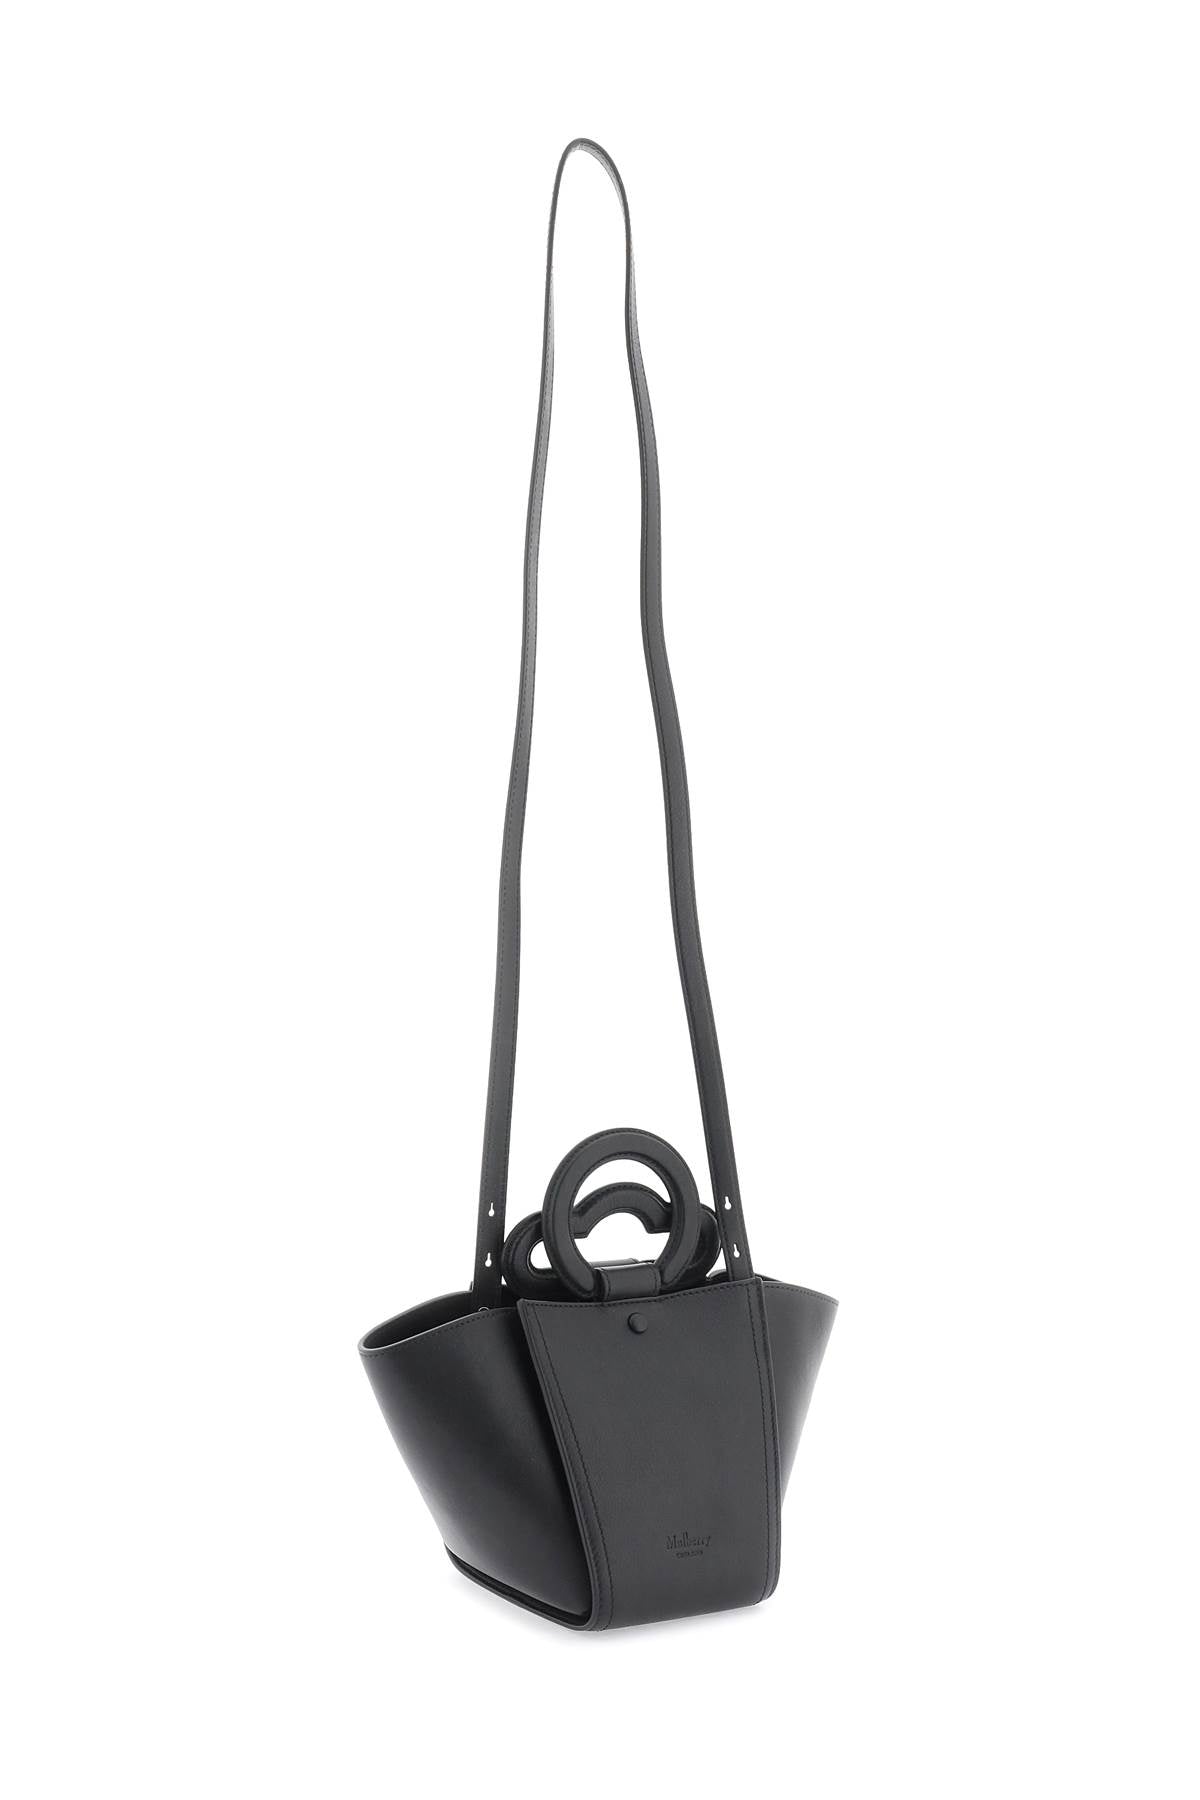 MULBERRY 'MINI RIDER'S TOP HANDLE' Handbag